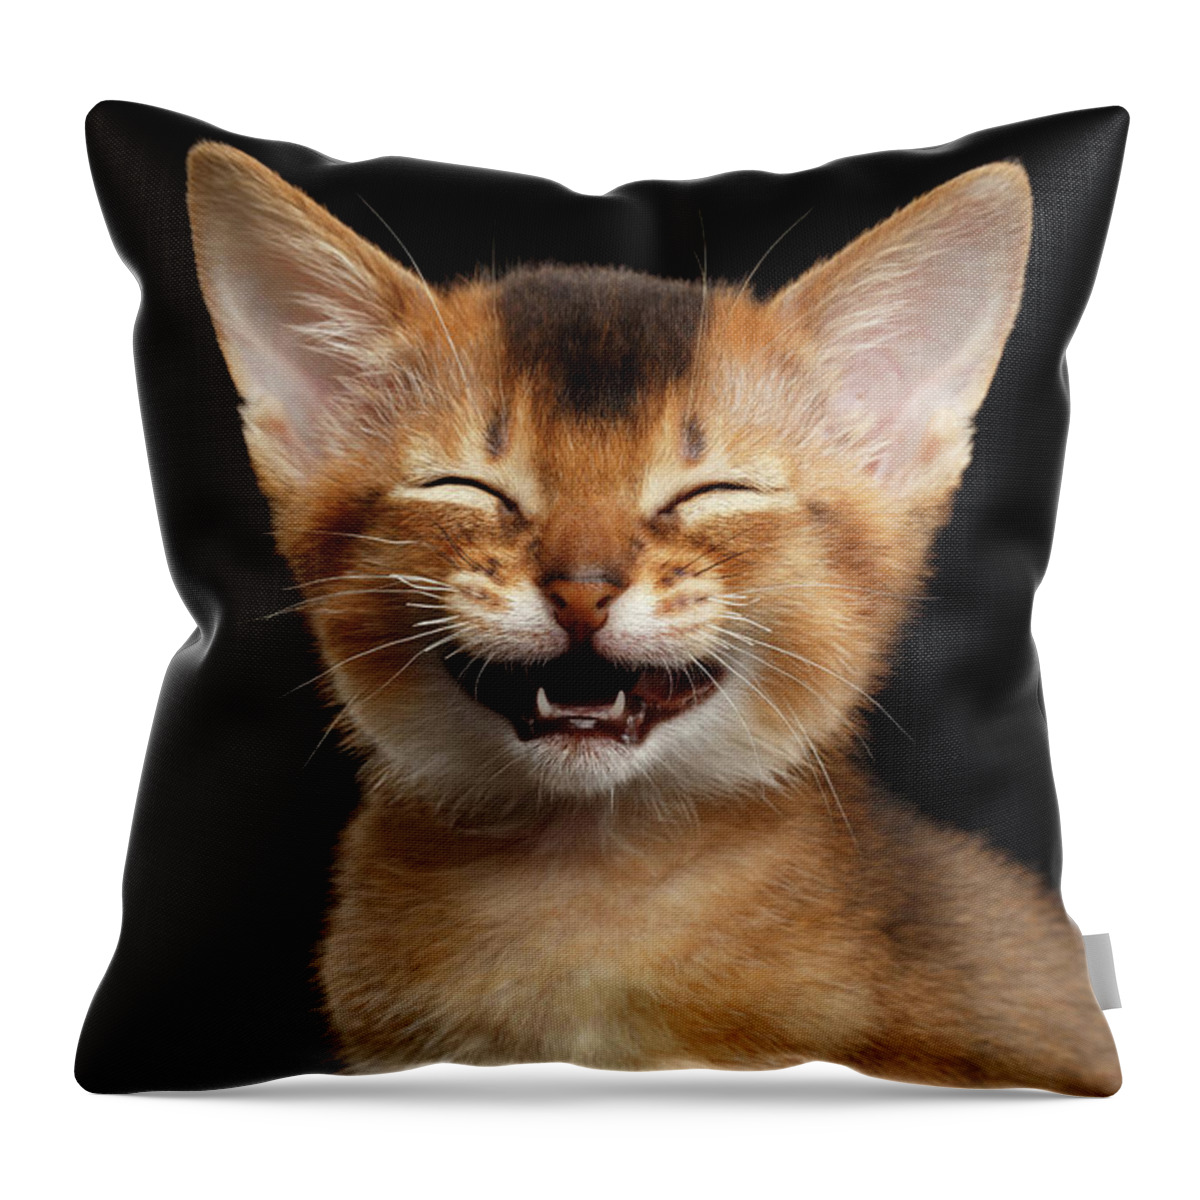 Kitten Throw Pillow featuring the photograph Laughing Kitten by Sergey Taran